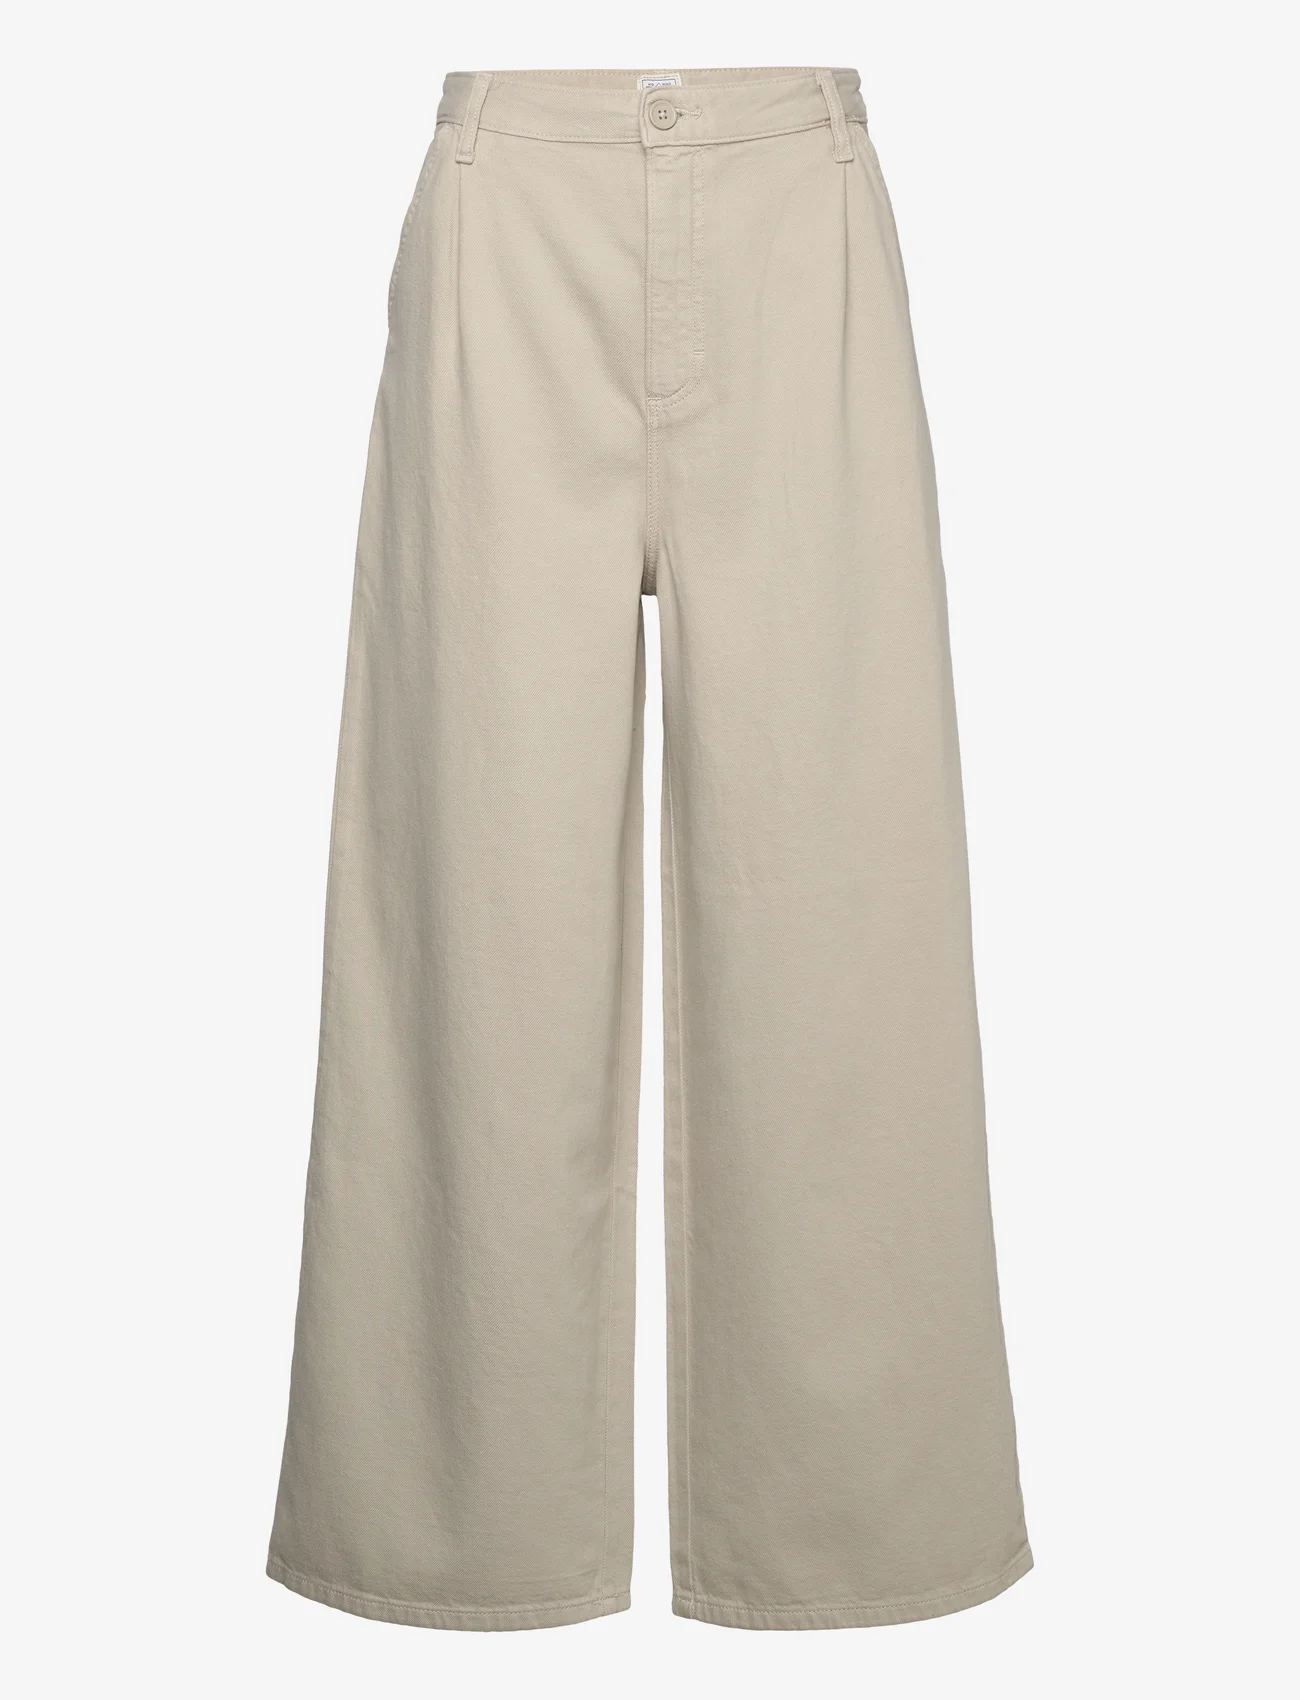 Lee Jeans - RELAXED CHINO - plačios kelnės - salina stone - 0